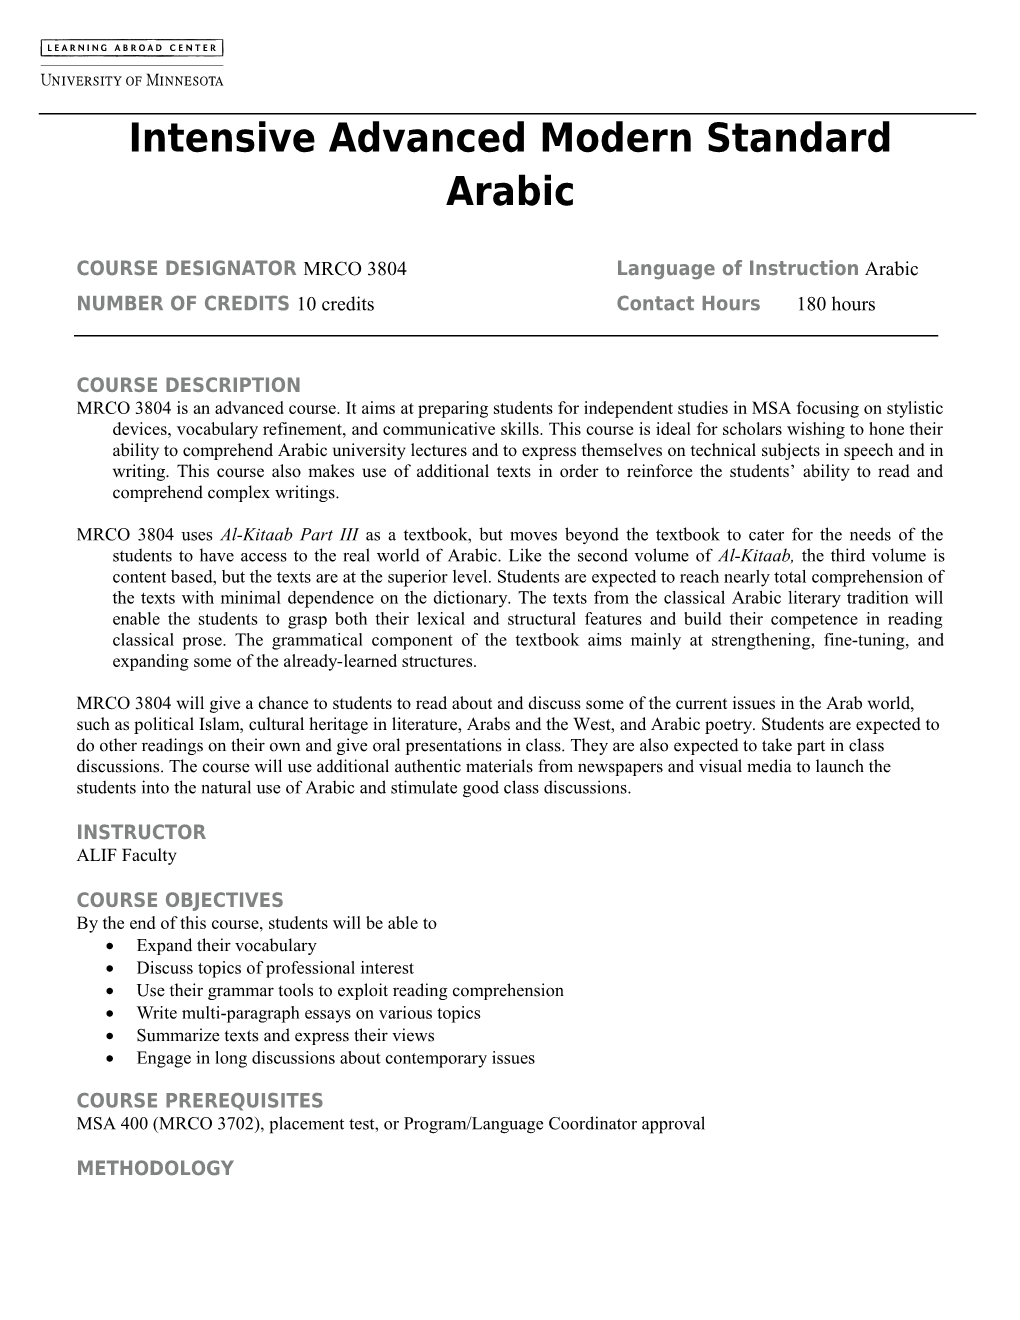 Intensive Advanced Modern Standard Arabic